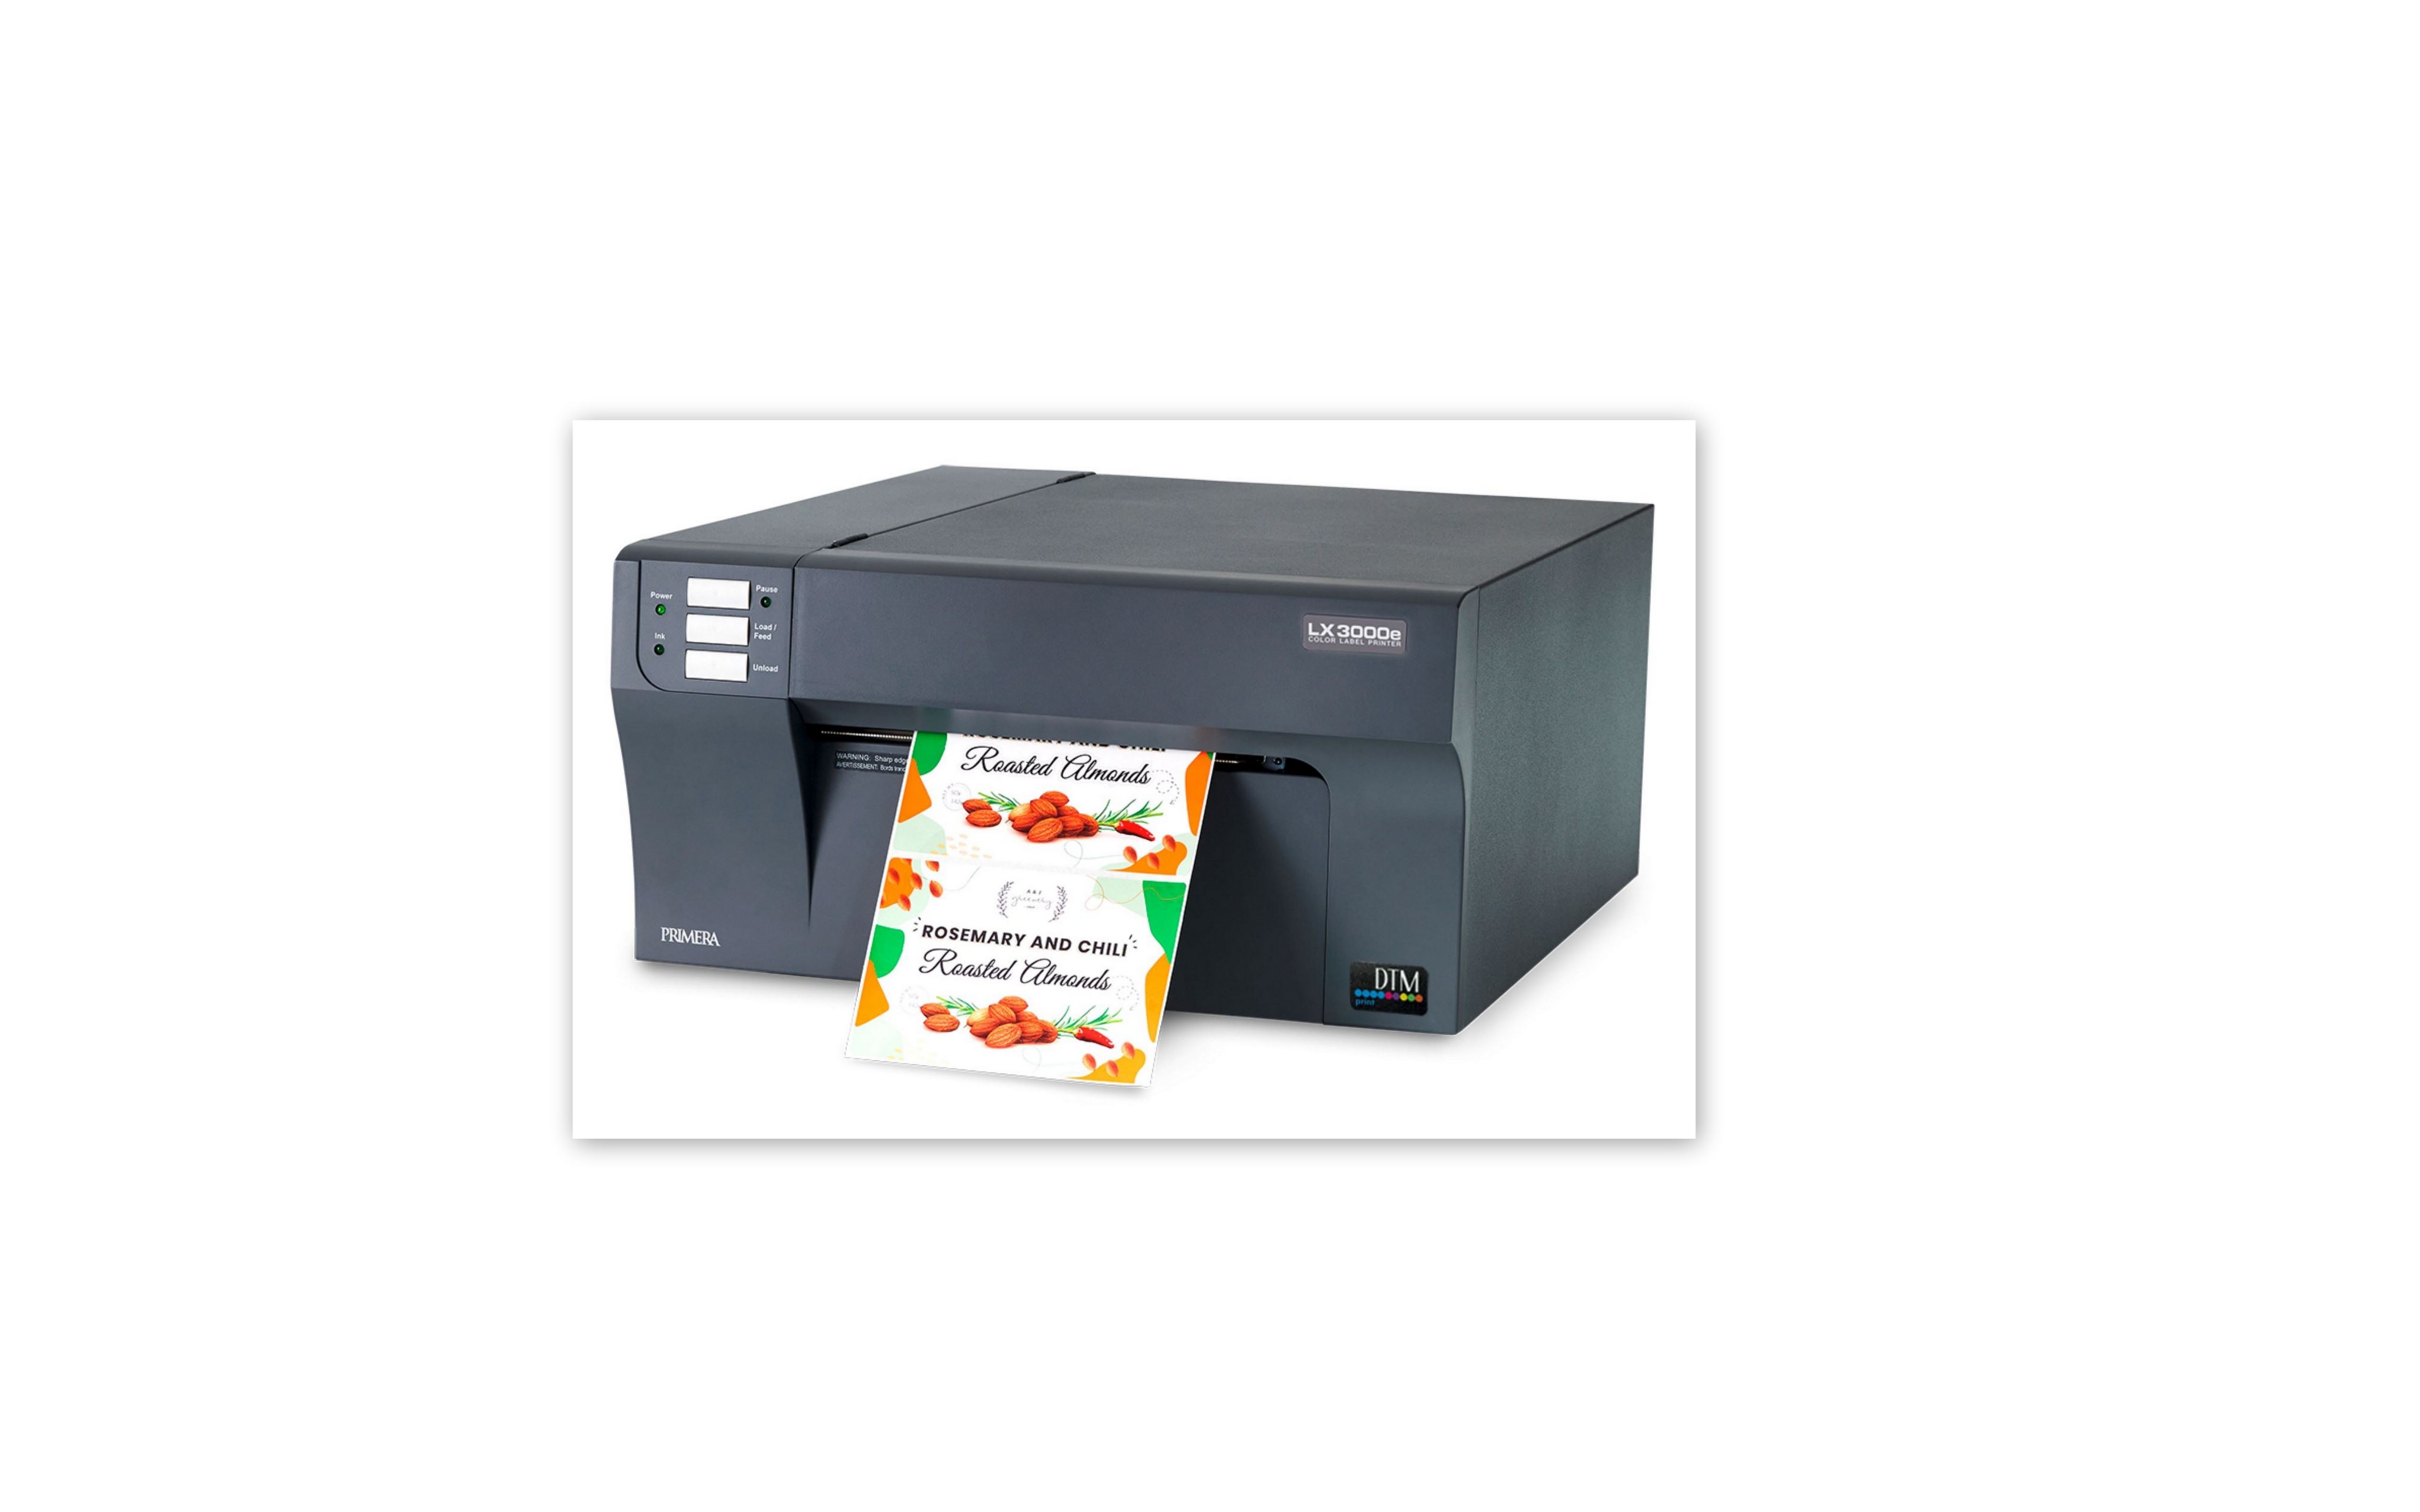 Label Pigment-basierte DTM LX3000e Printer Color mit Vollfarb-Drucktechnologie Netzwerkfähig Label Pigment PRINT drei separaten Tintentanks(CMY) WLAN Inkjet Printer